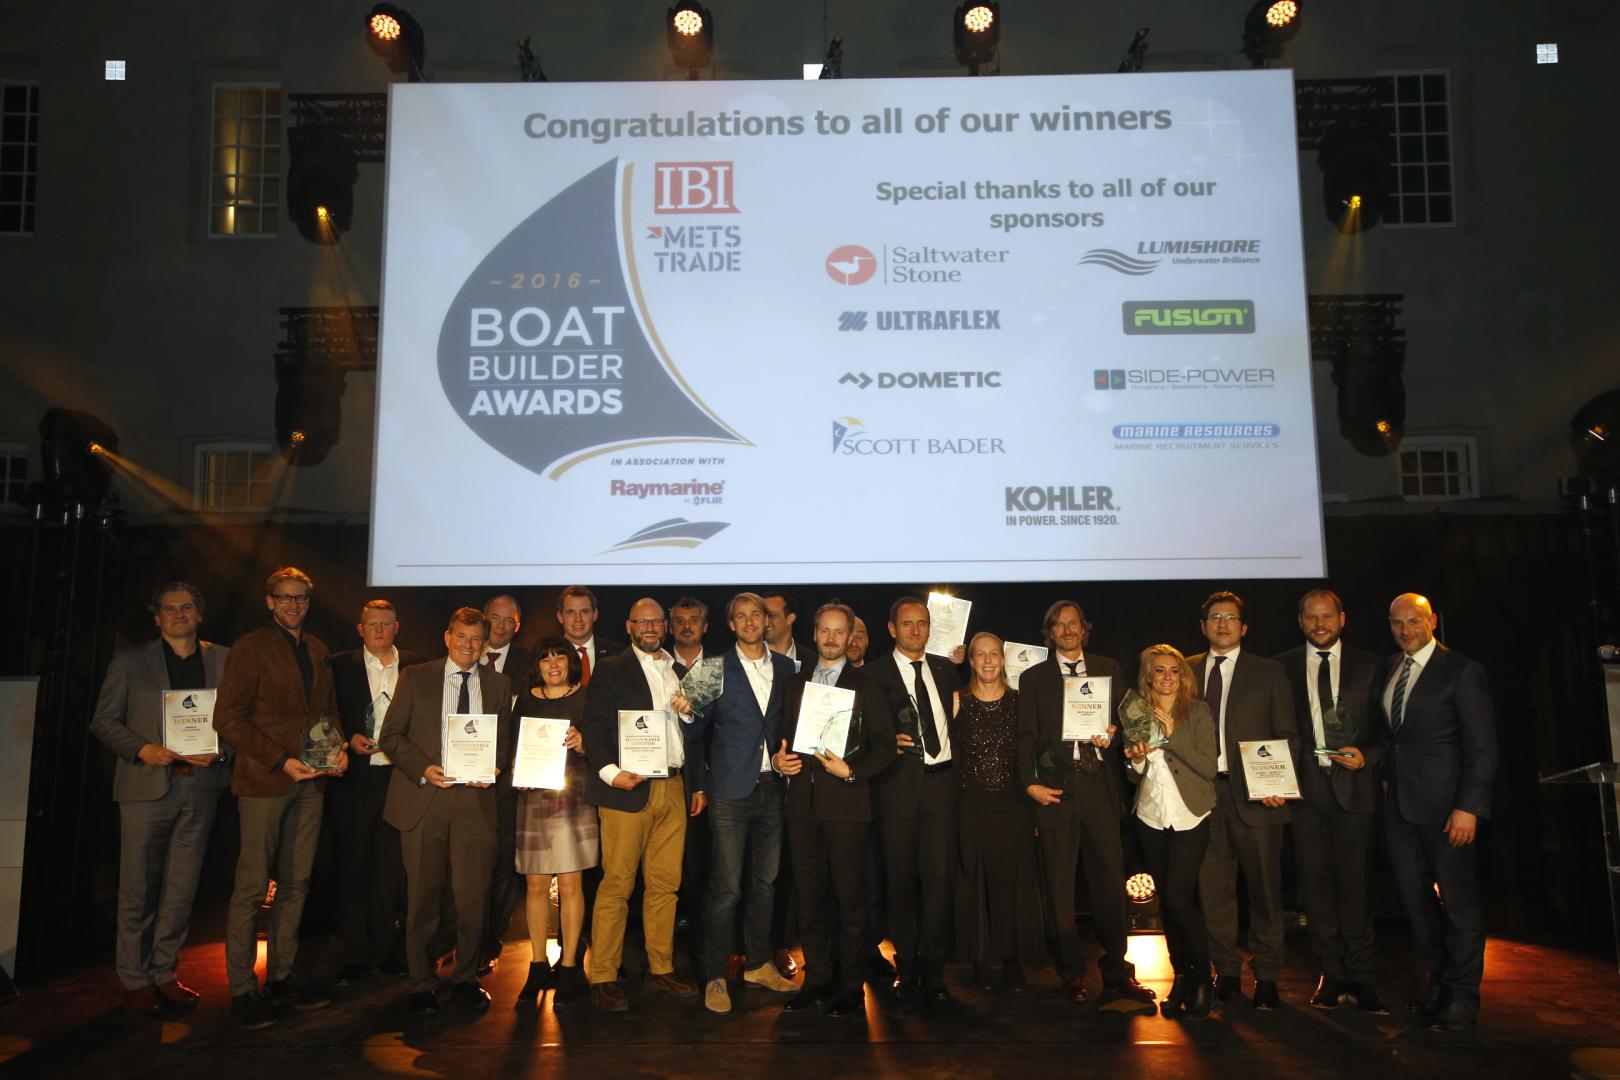 Boat Builder Awards 2016